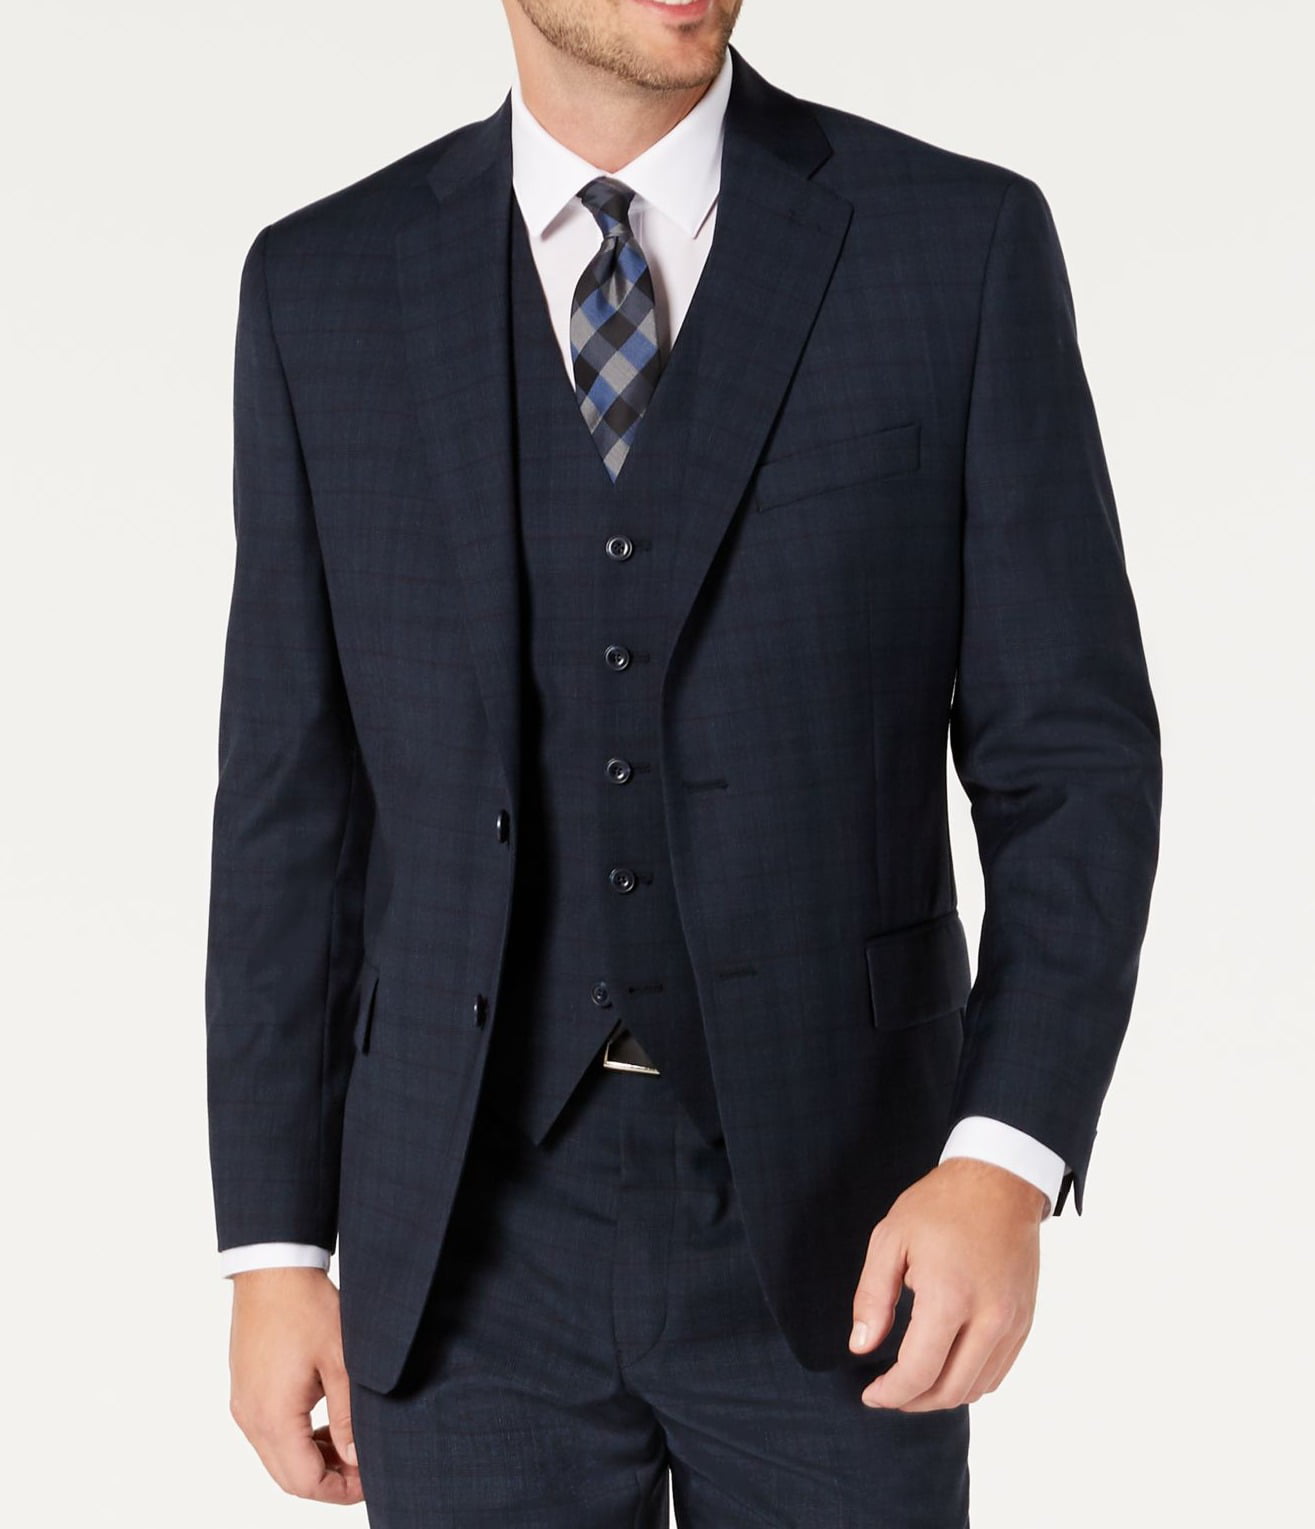 Mens 3 Piece Suit Retro Black Plaid Grid Check on Royal Blue Tailored Fit Contrast Navy Waistcoat